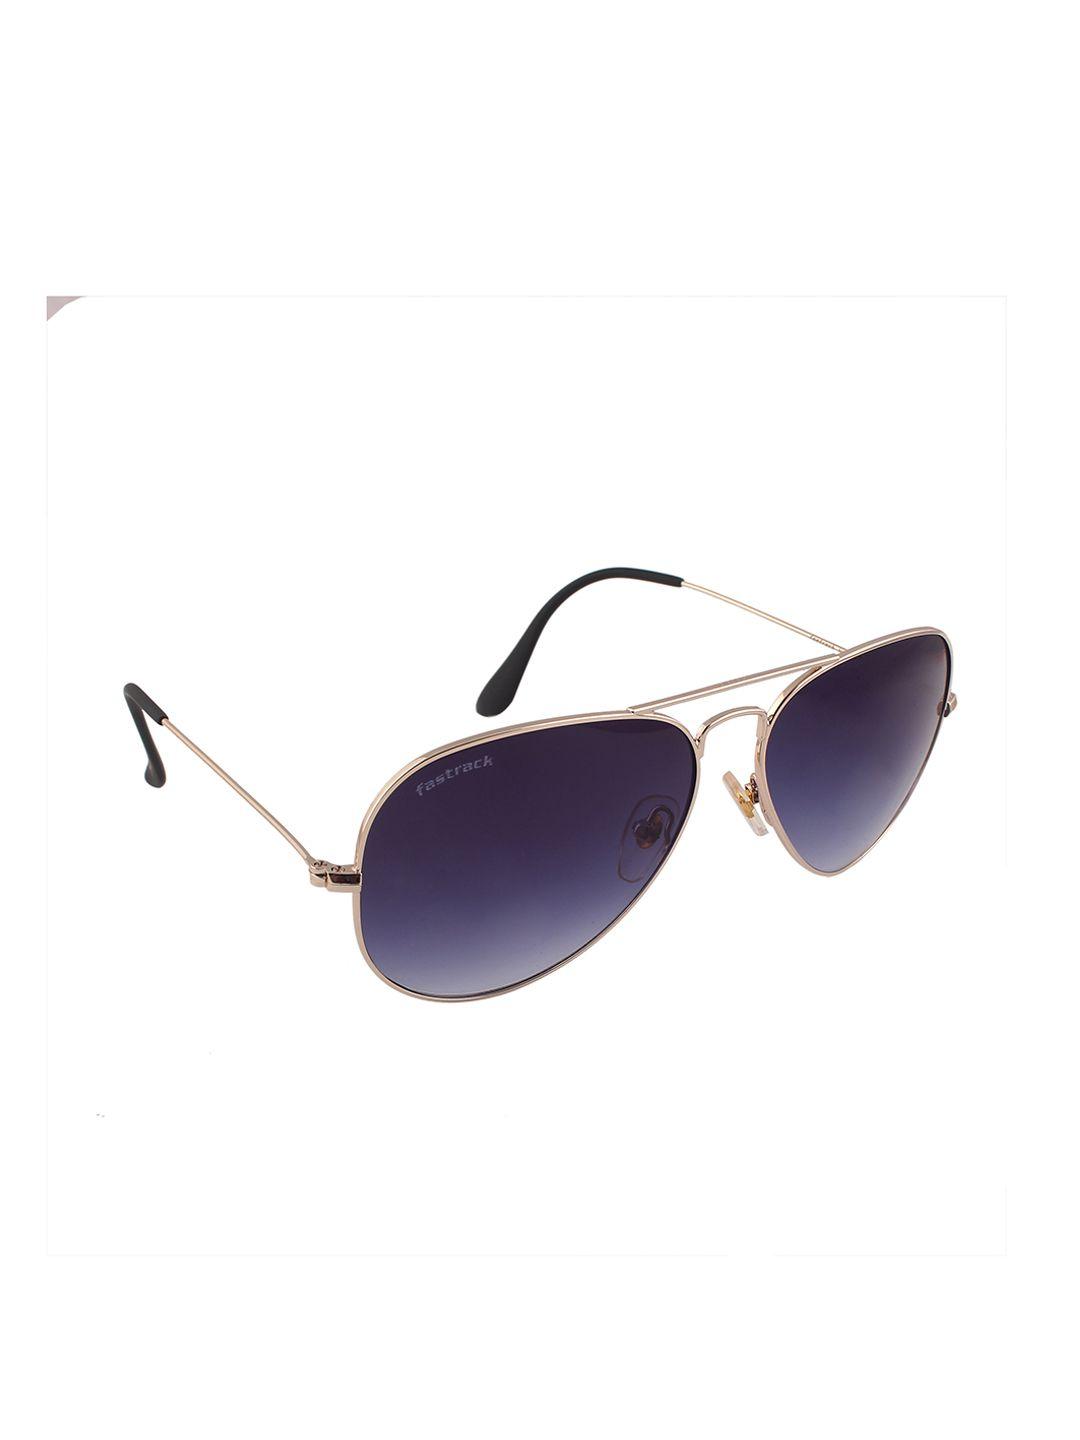 fastrack-men-aviator-sunglasses-m165br12